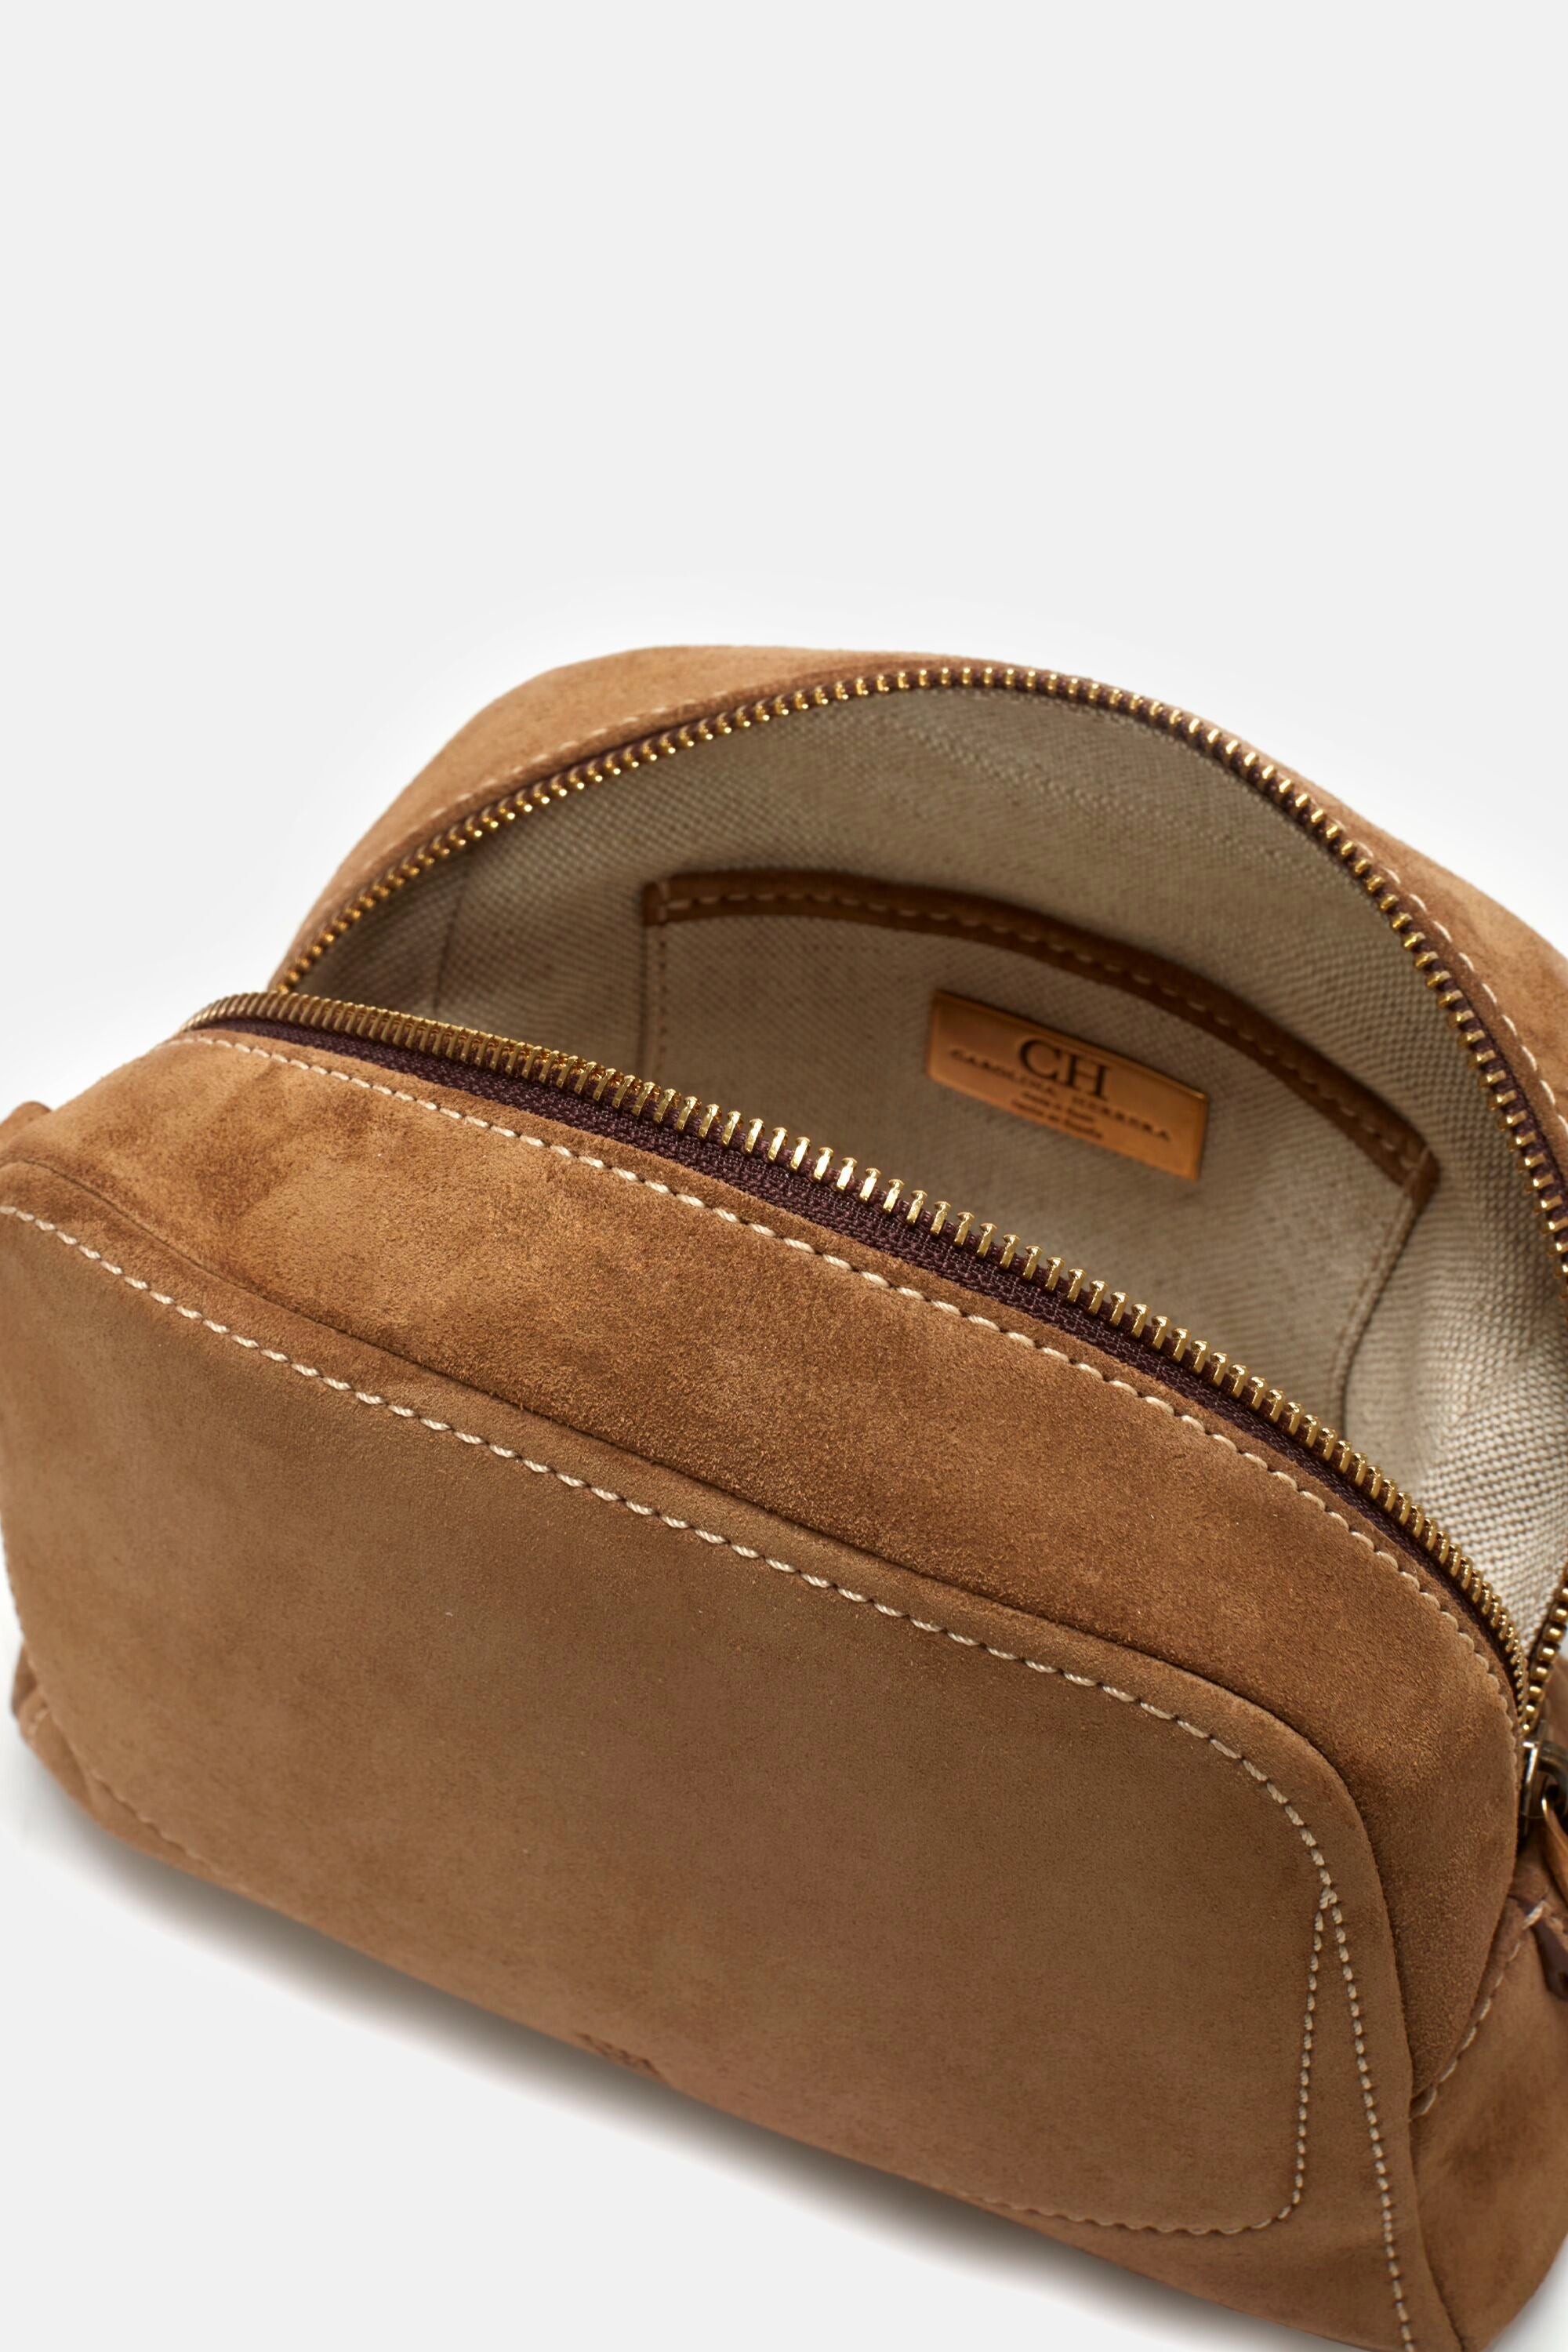 Small Zipper Bag - Crossover Bag